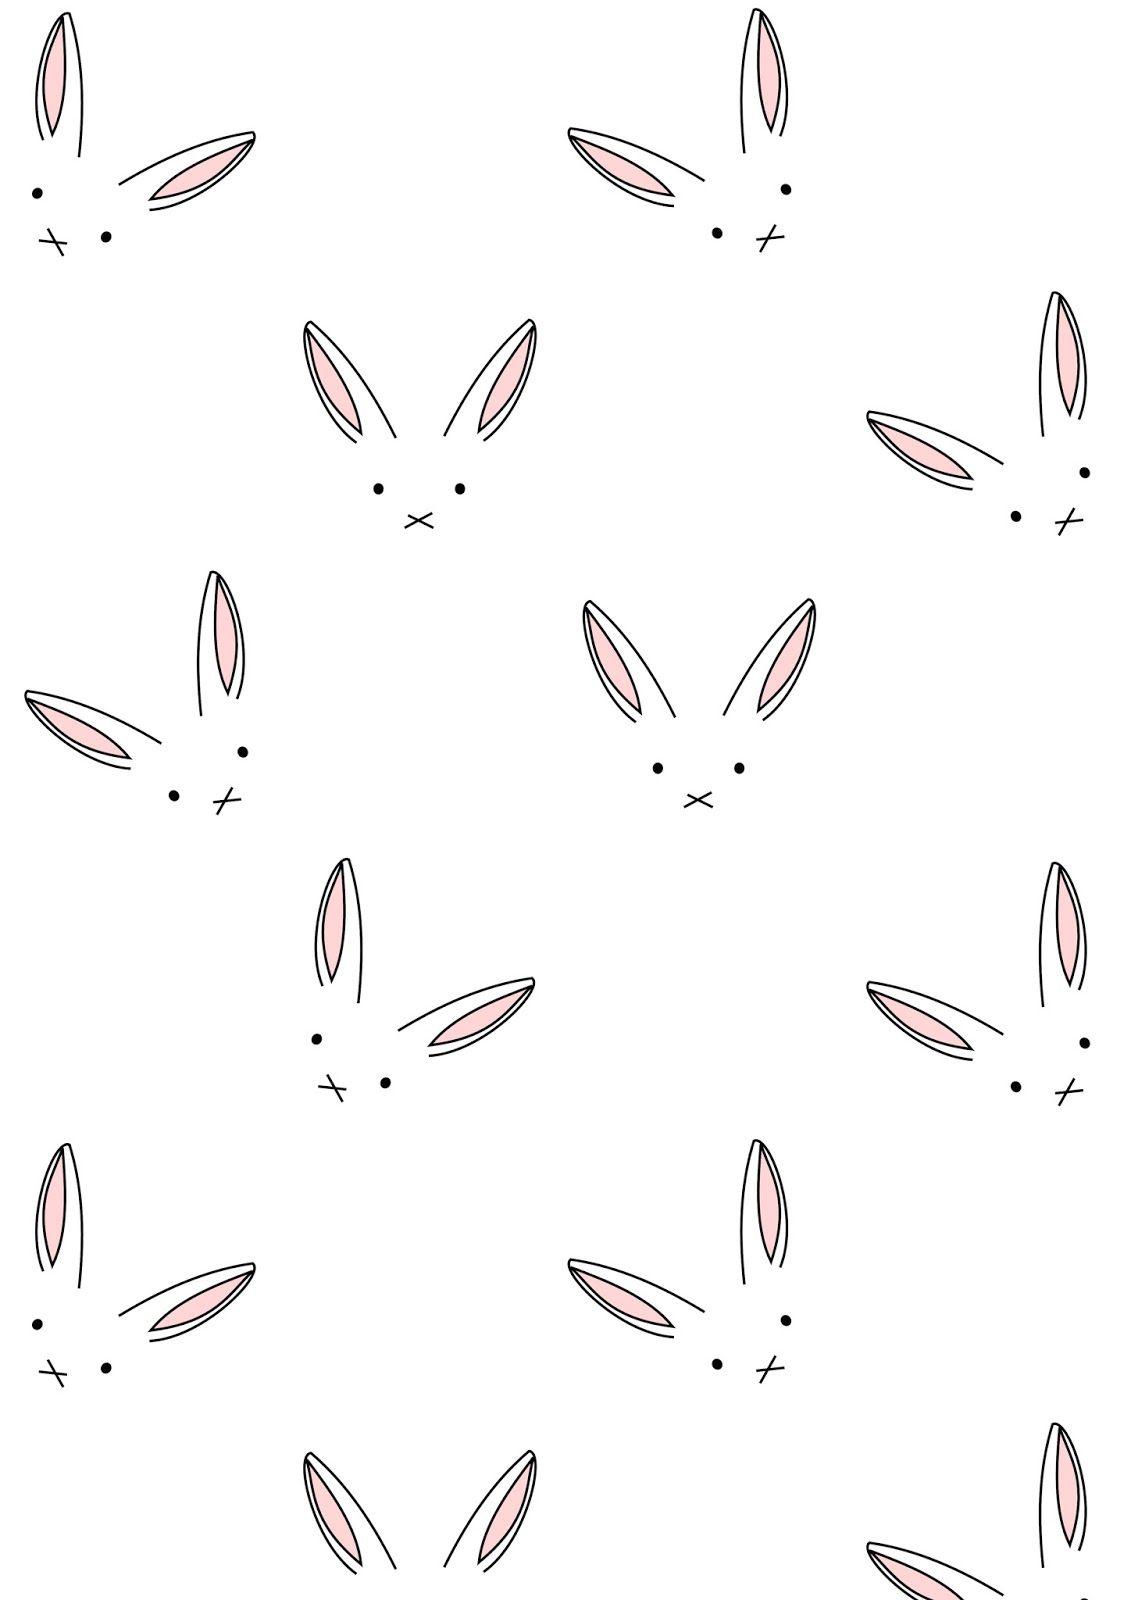 Rabbit iPhone Wallpapers  Top Free Rabbit iPhone Backgrounds   WallpaperAccess